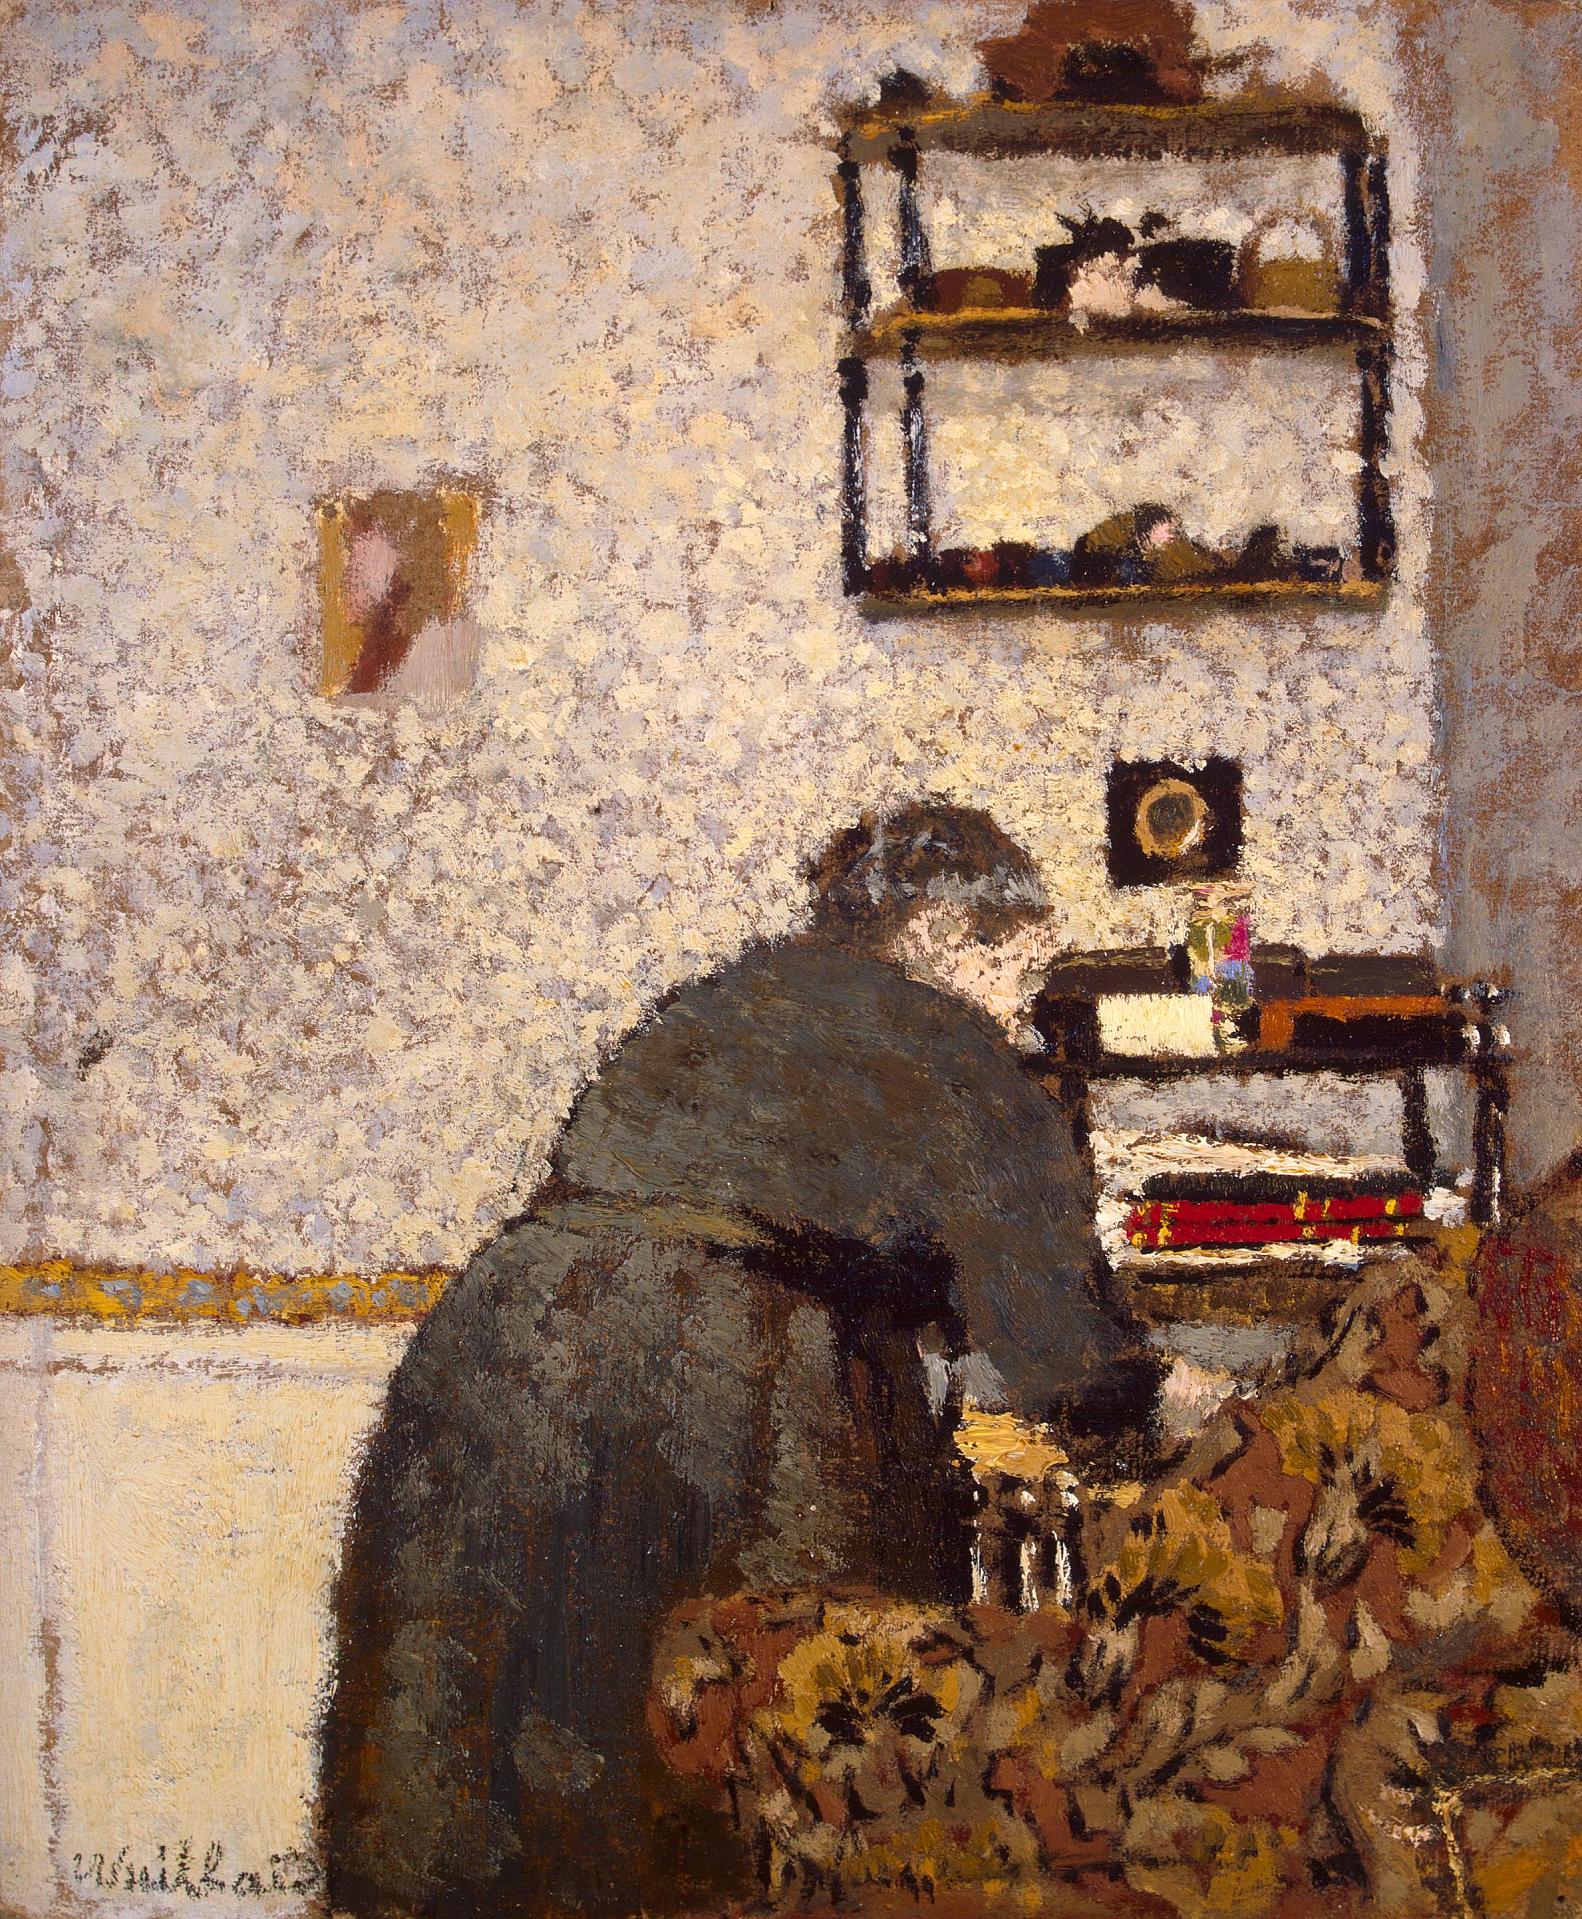 Жан Эдуард Вюйар. "Мадам Вюйар в гостиной". Около 1893. Эрмитаж, Санкт-Петербург.